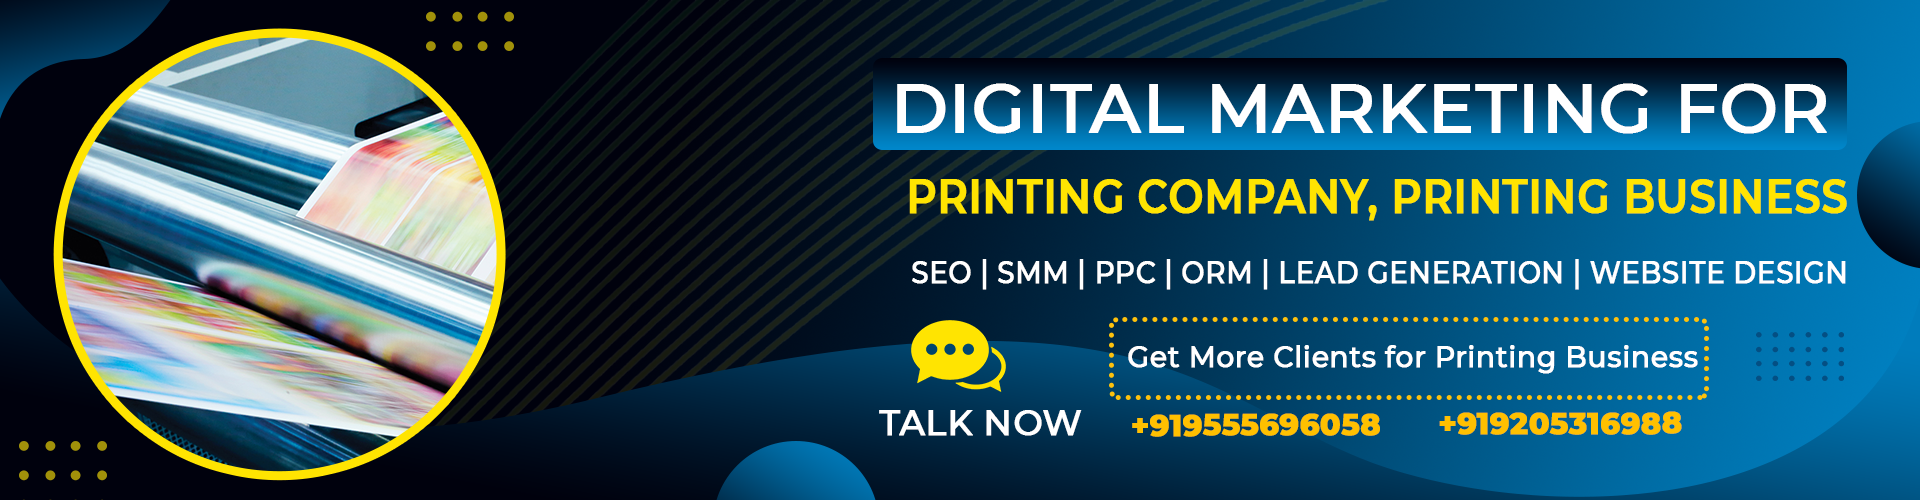 digital-marketing-for-printing-company-printing-business